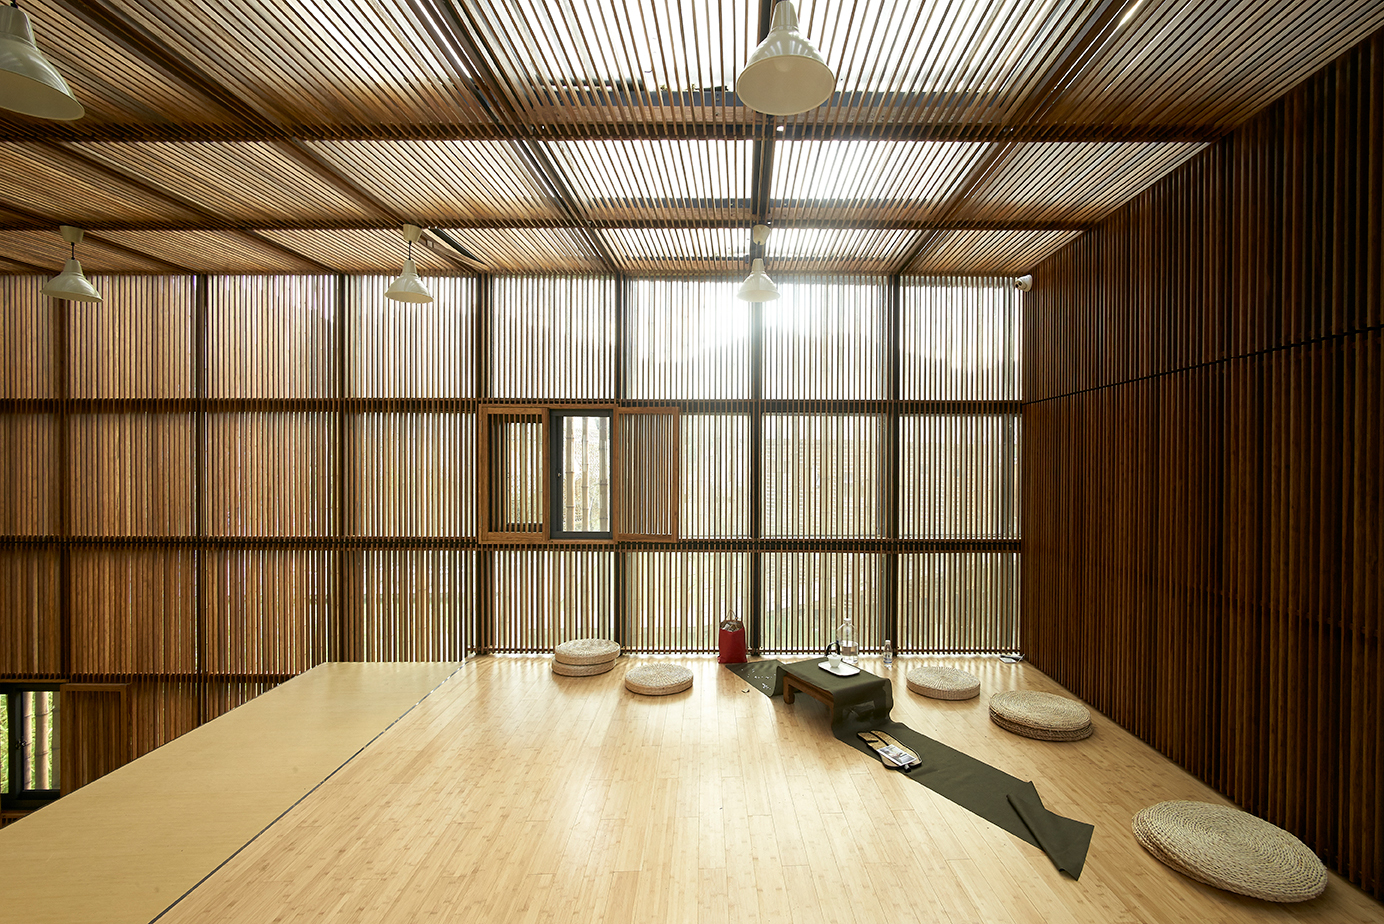 60 Desain Plafon Bambu  Sederhana  Rasa Modern Rumahku Unik